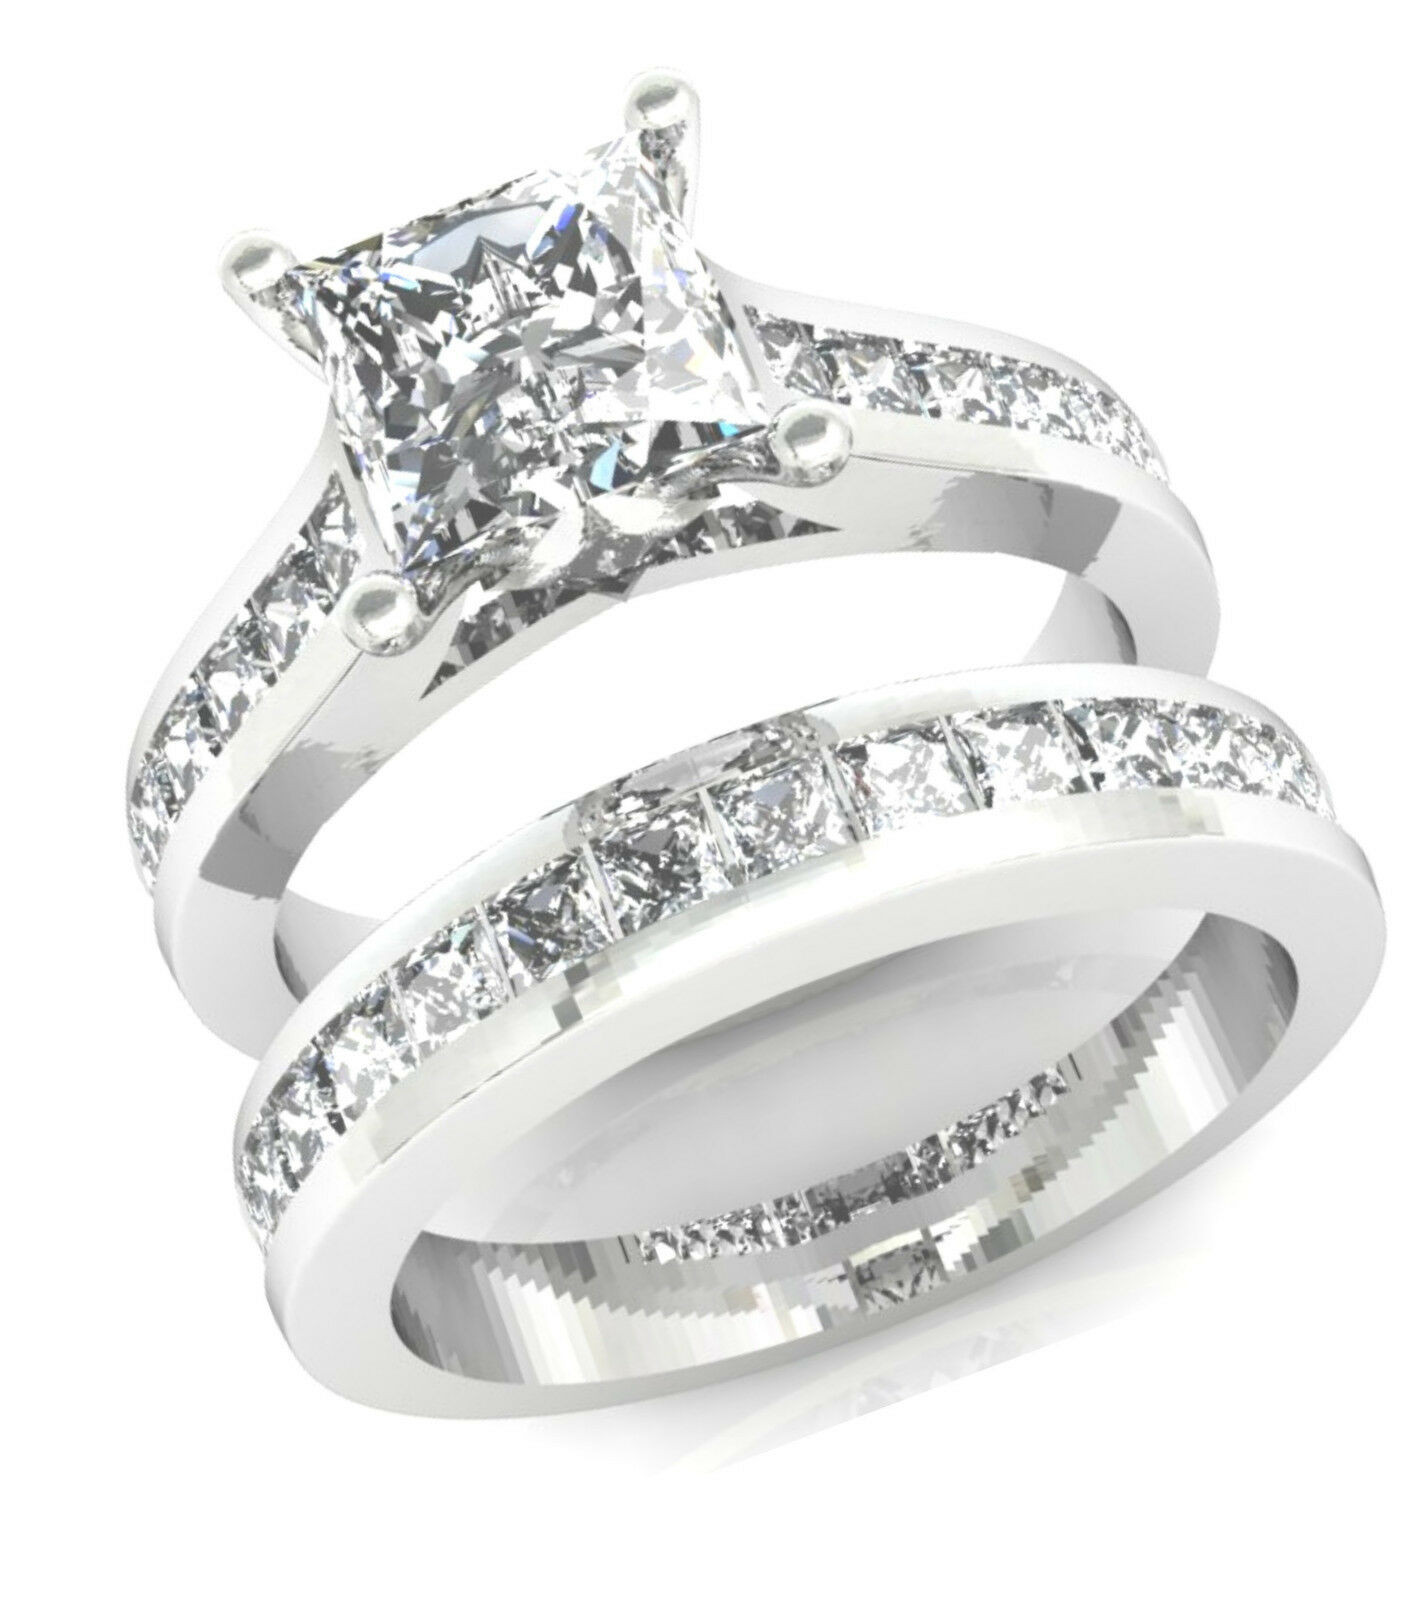 Princess Cut Engagement Rings
 3 2CT PRINCESS CUT CHANNEL SET ENGAGEMENT RING WEDDING